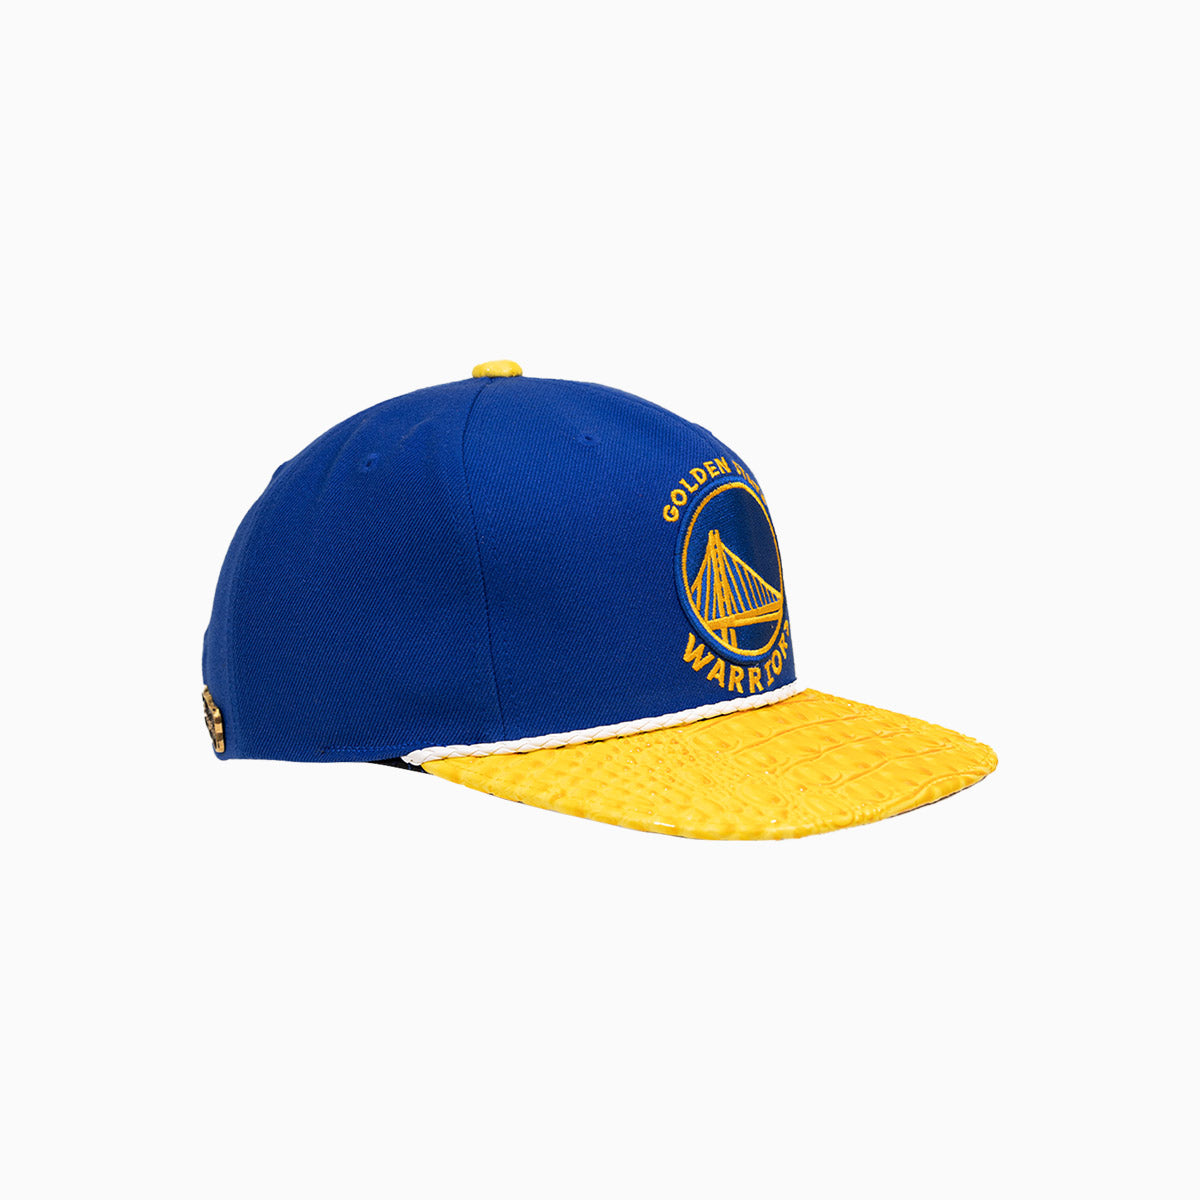 Breyer's Buck 50 Golden State Warriors Hat With Leather Visor